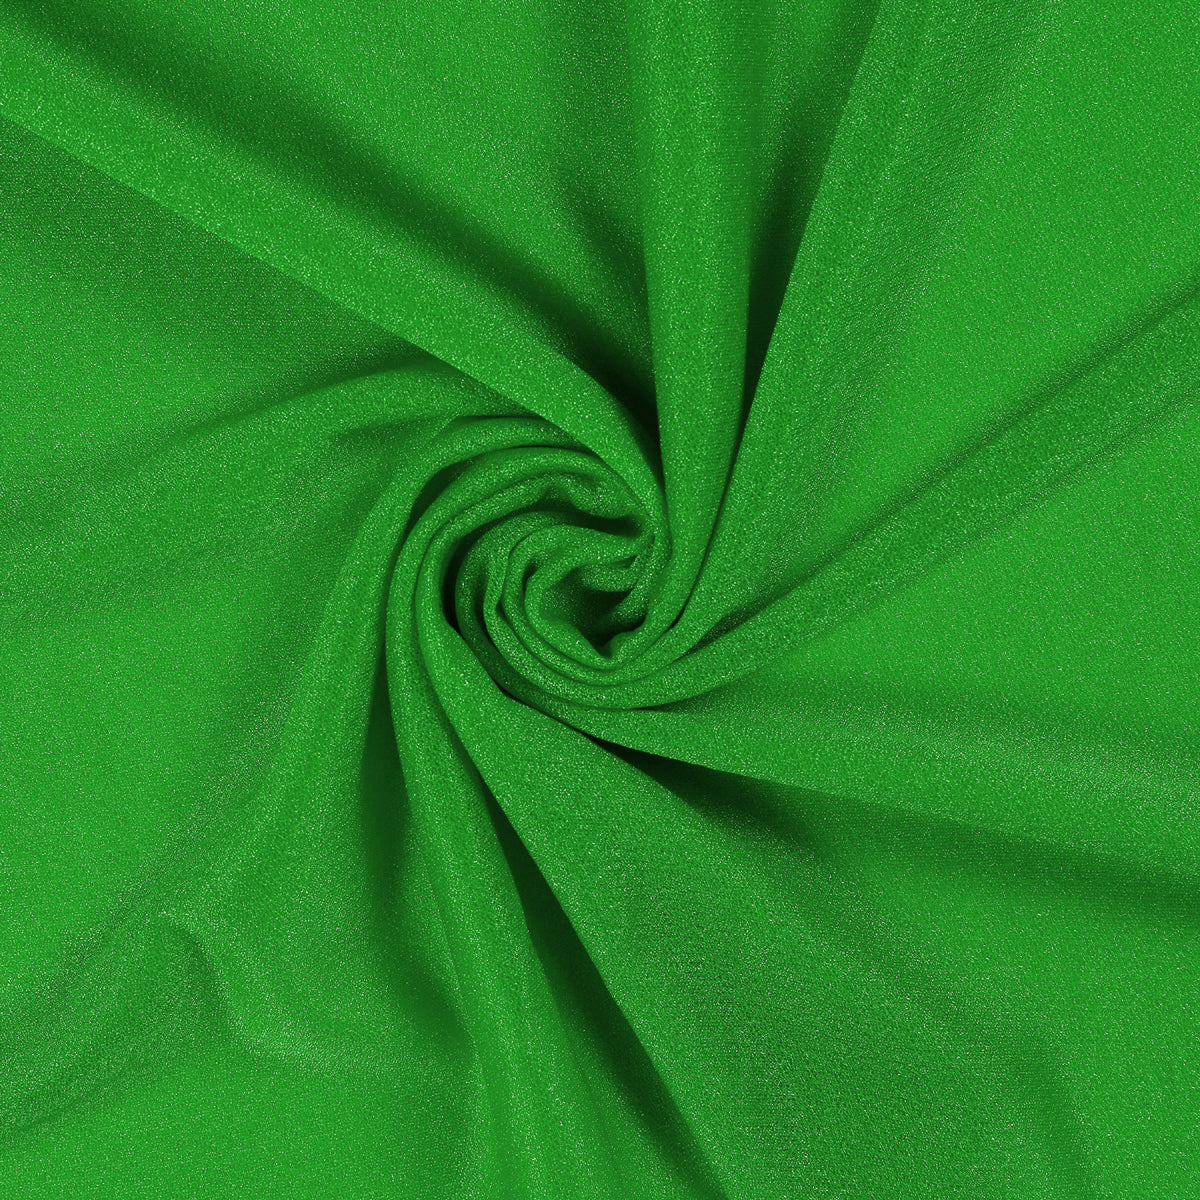 Green,a62bfa2e-af2d-45eb-be2b-cde34fd7db18